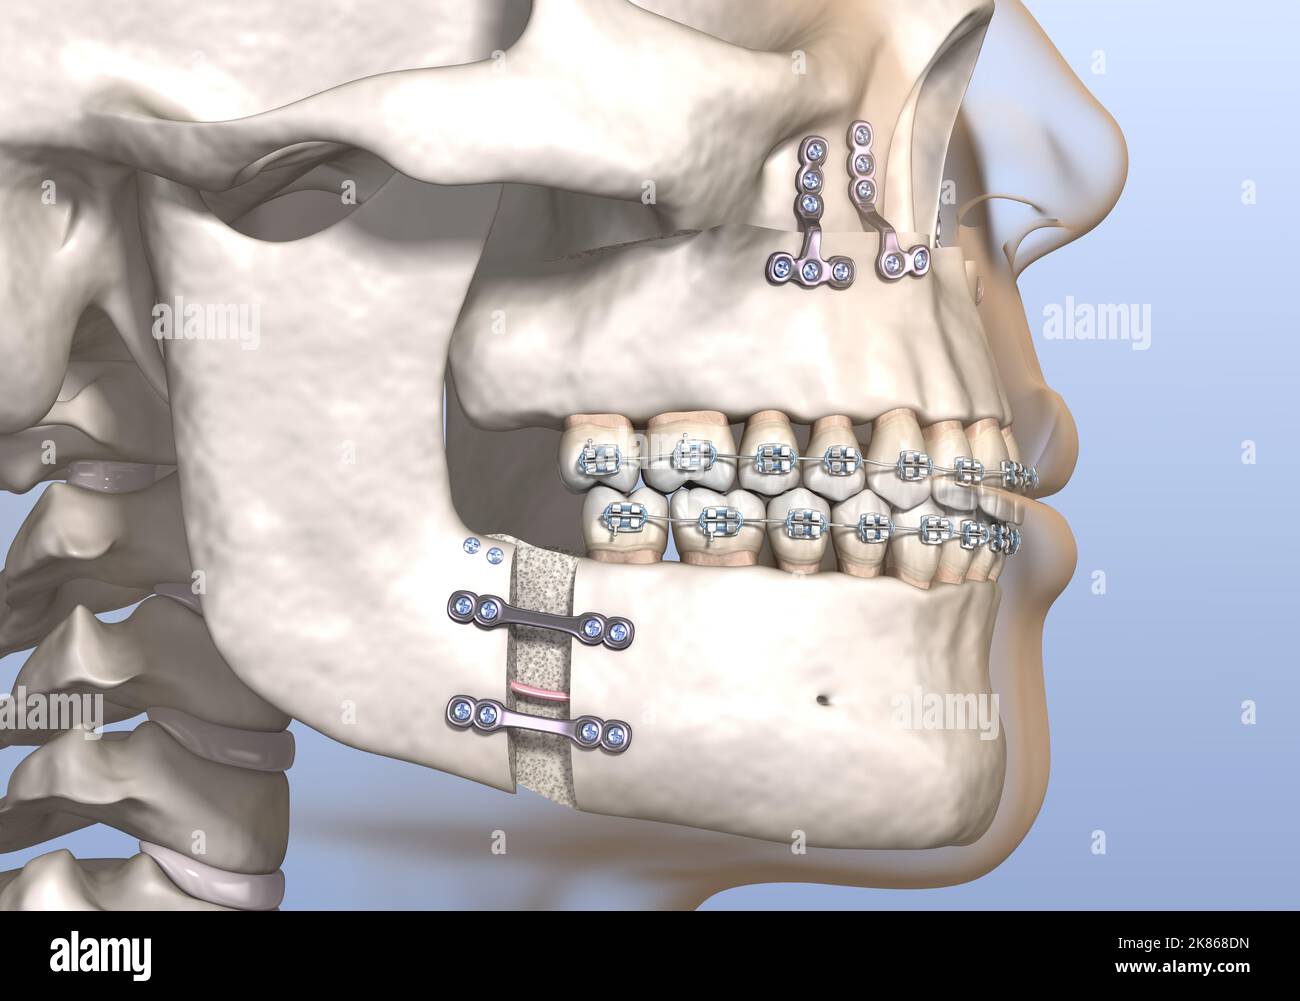 Maxillomandibuläre Advancement Chirurgie. Medizinisch genaue zahnärztliche 3D Illustration. Stockfoto